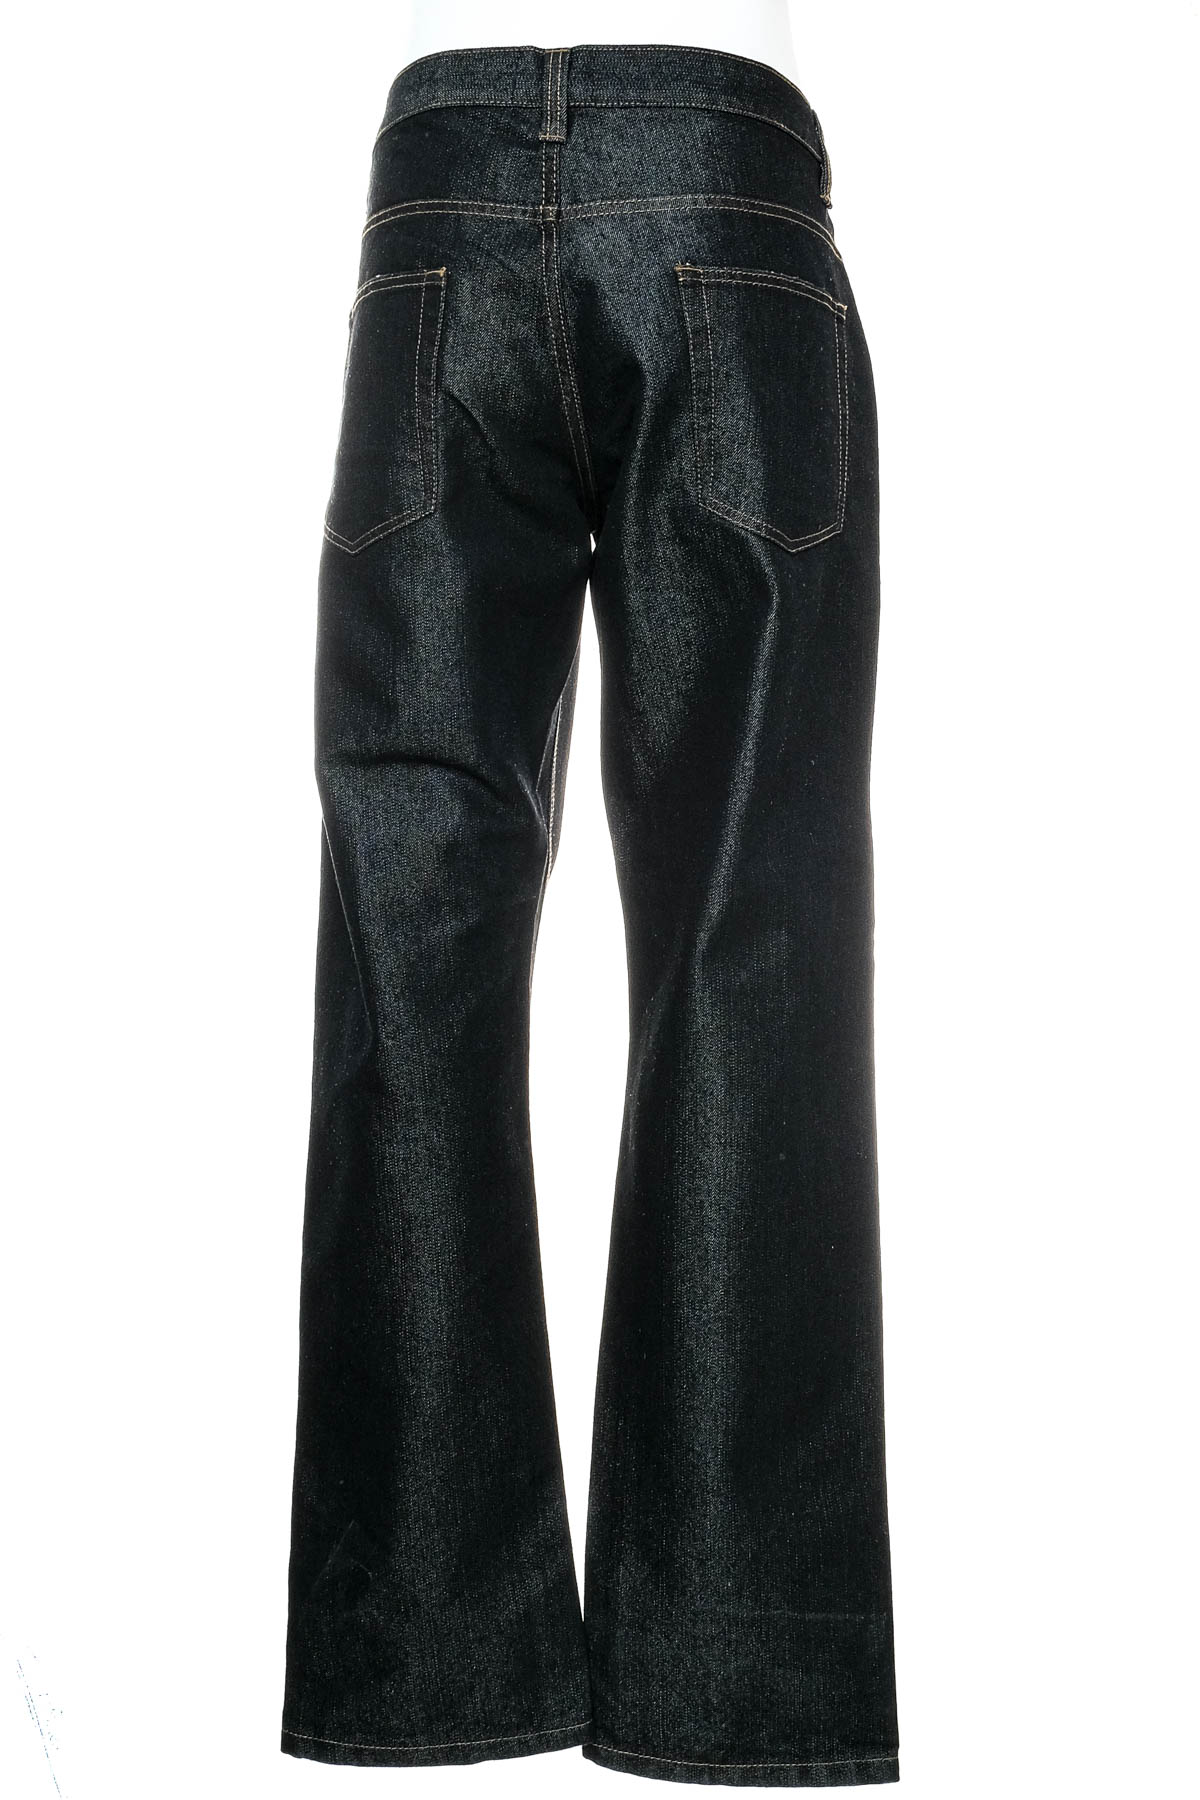 Men's jeans - Identic - 1